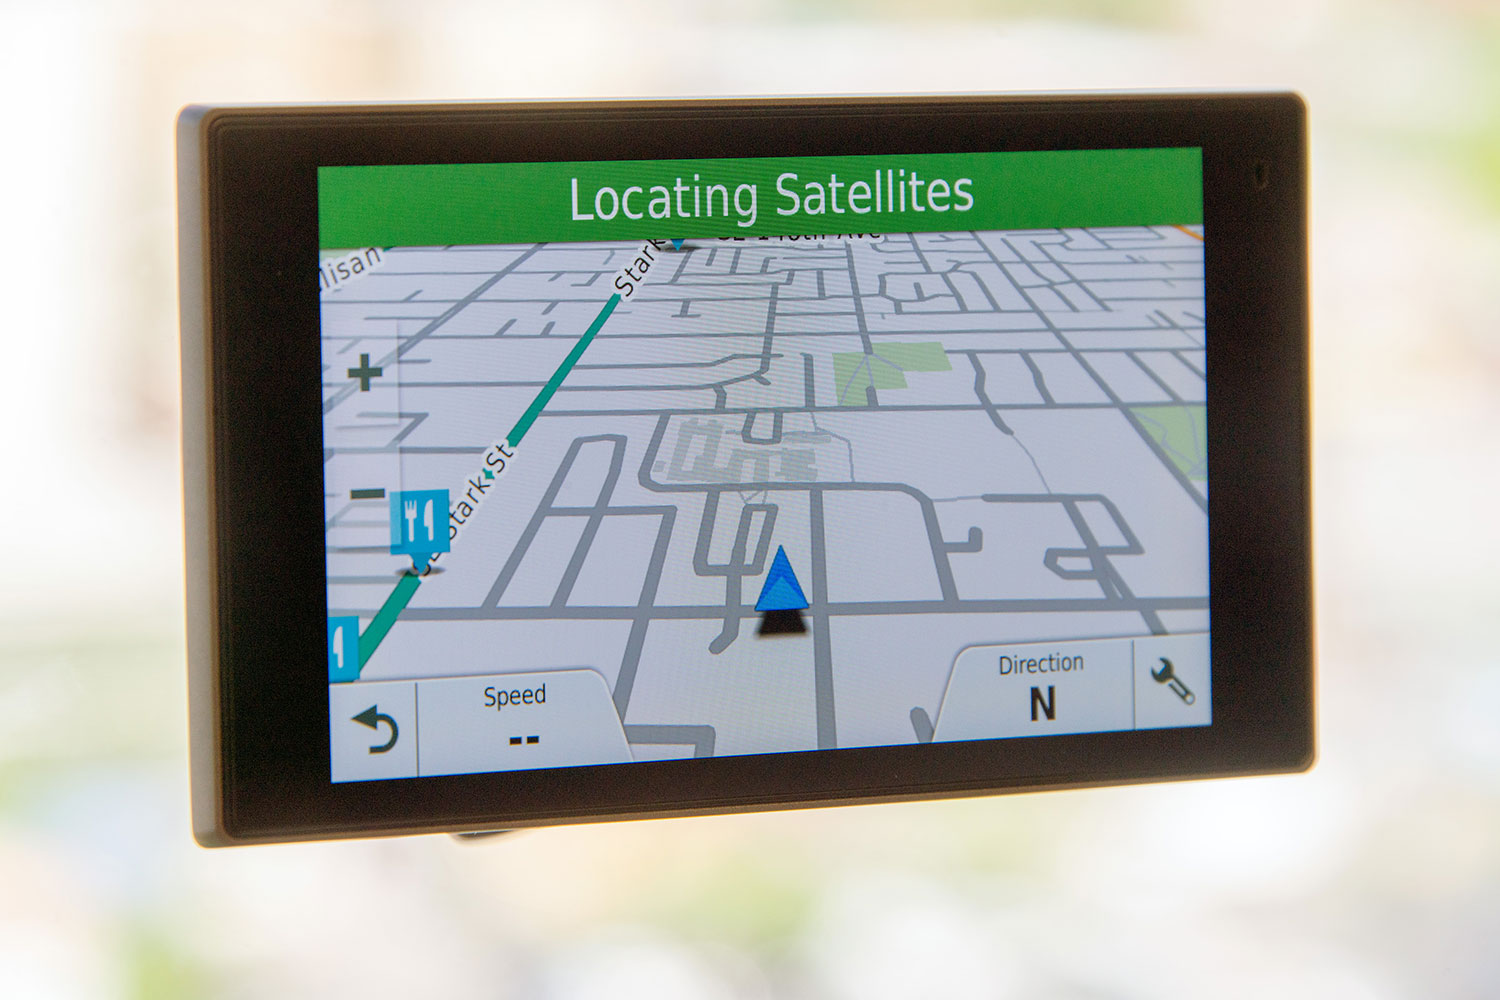 How to Update a Garmin GPS